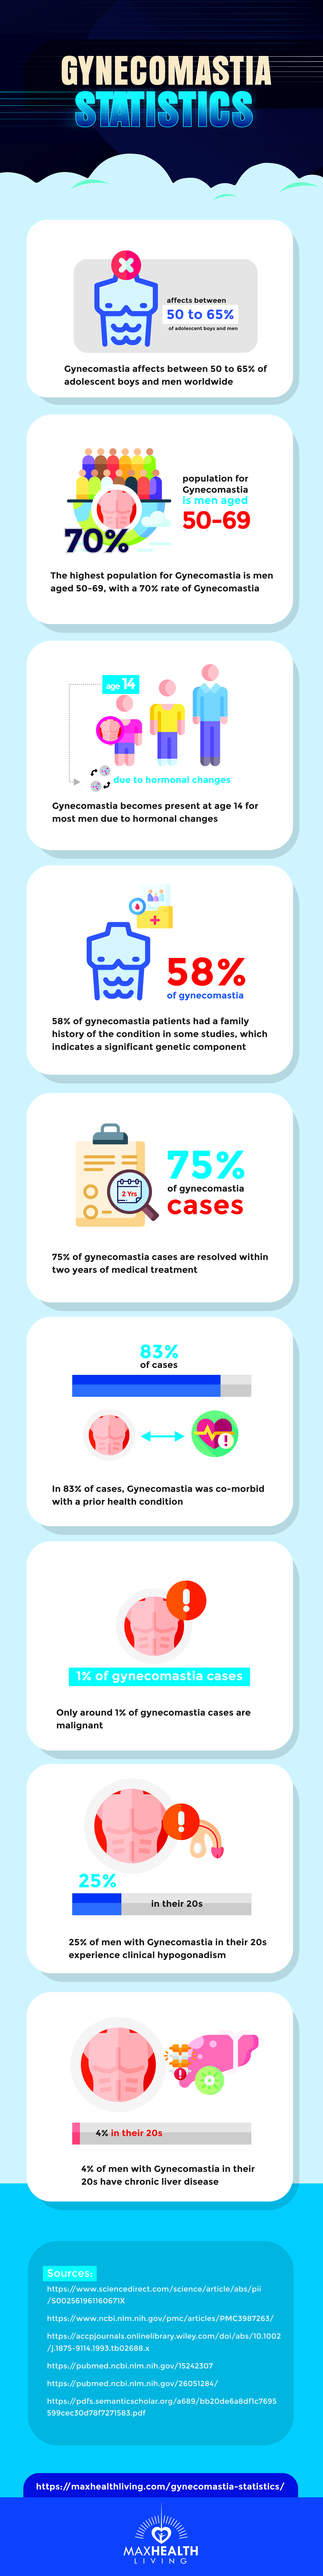 Gynecomastia Facts & Statistics Infographic